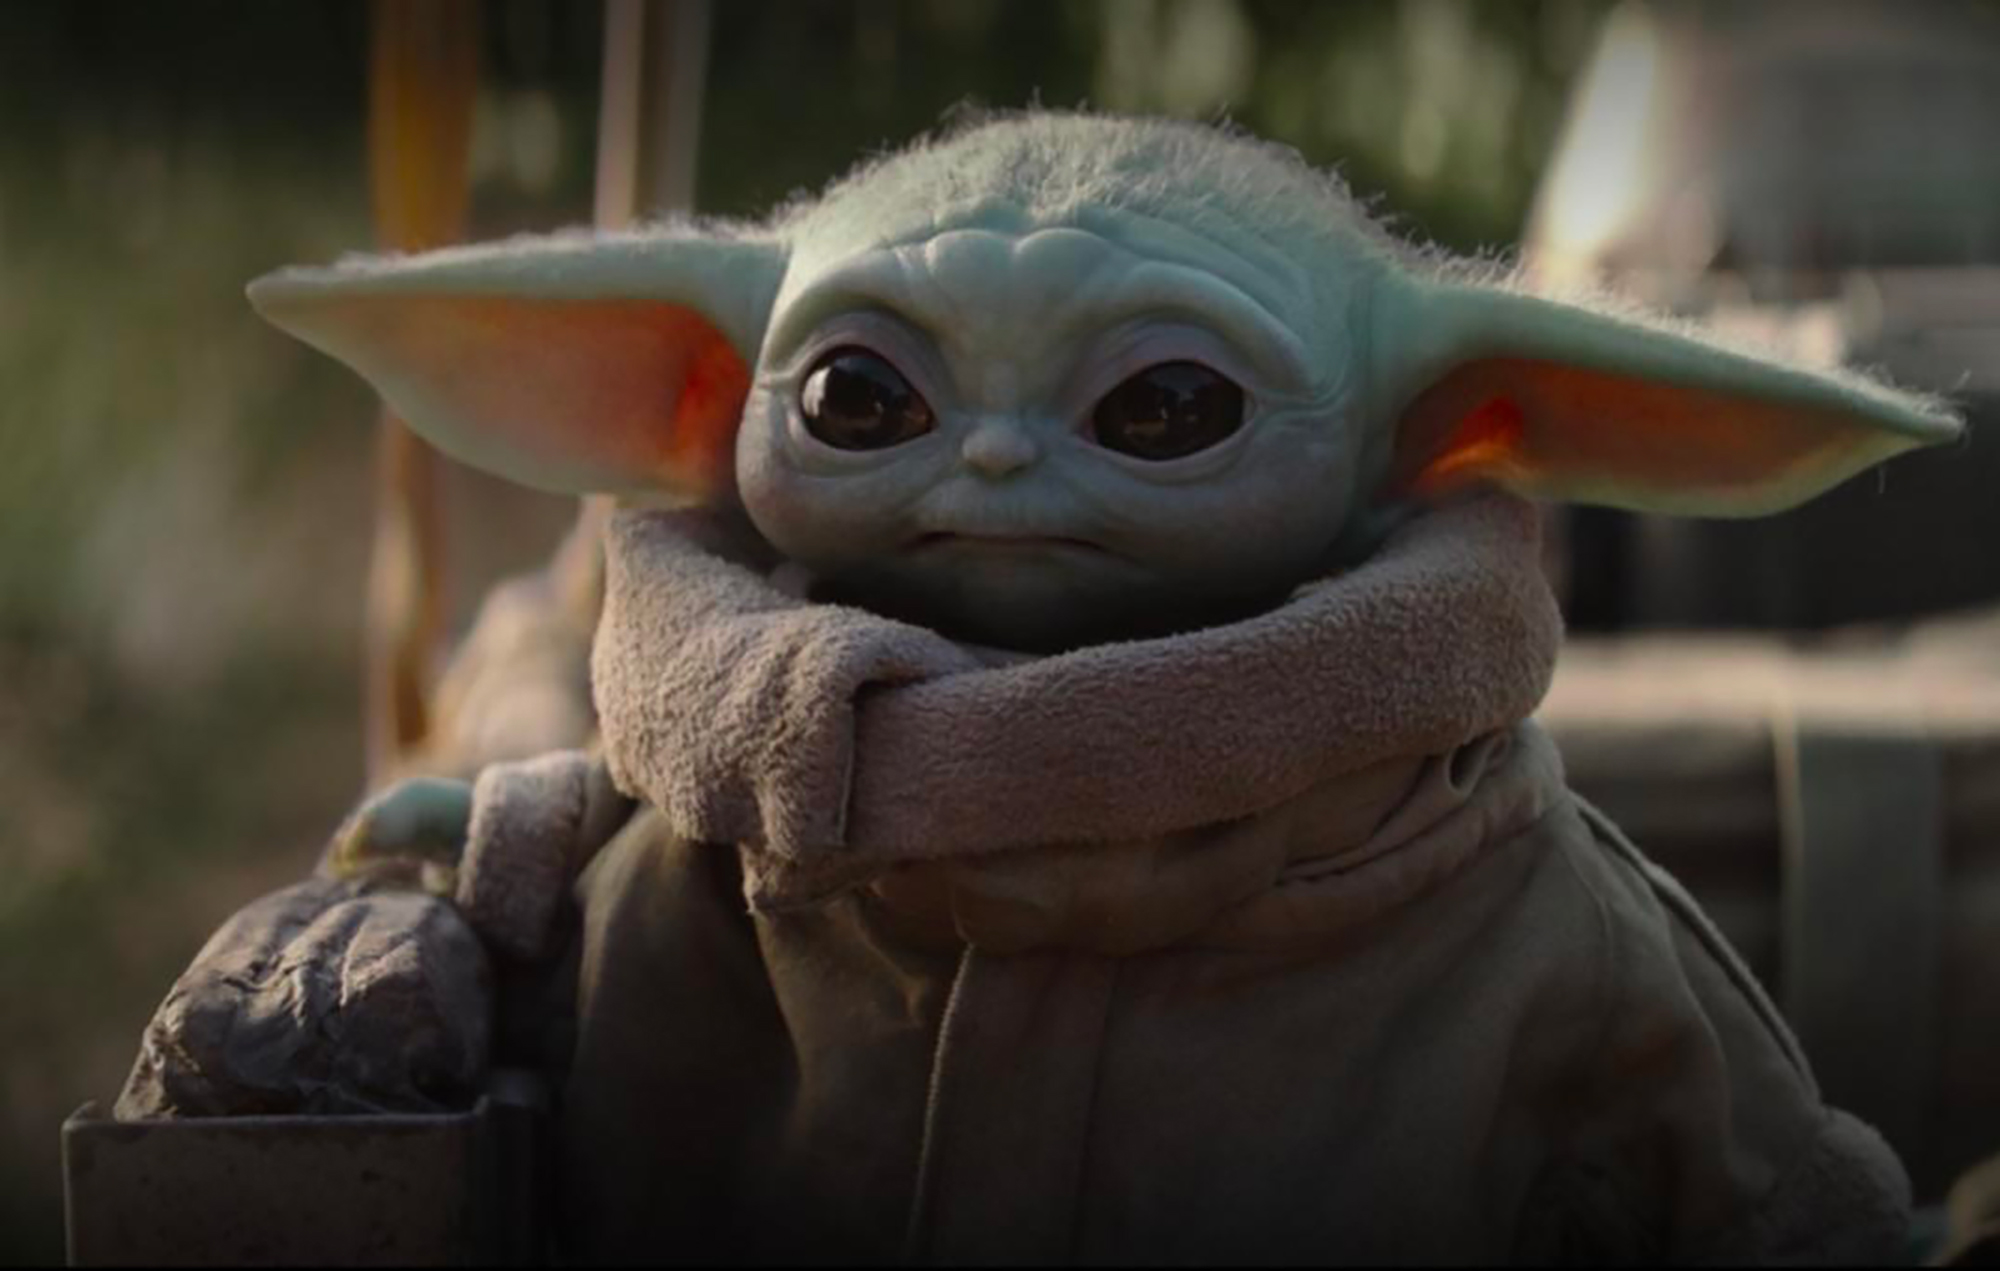 Baby Yoda - real name Grogu - in 'The Mandalorian'